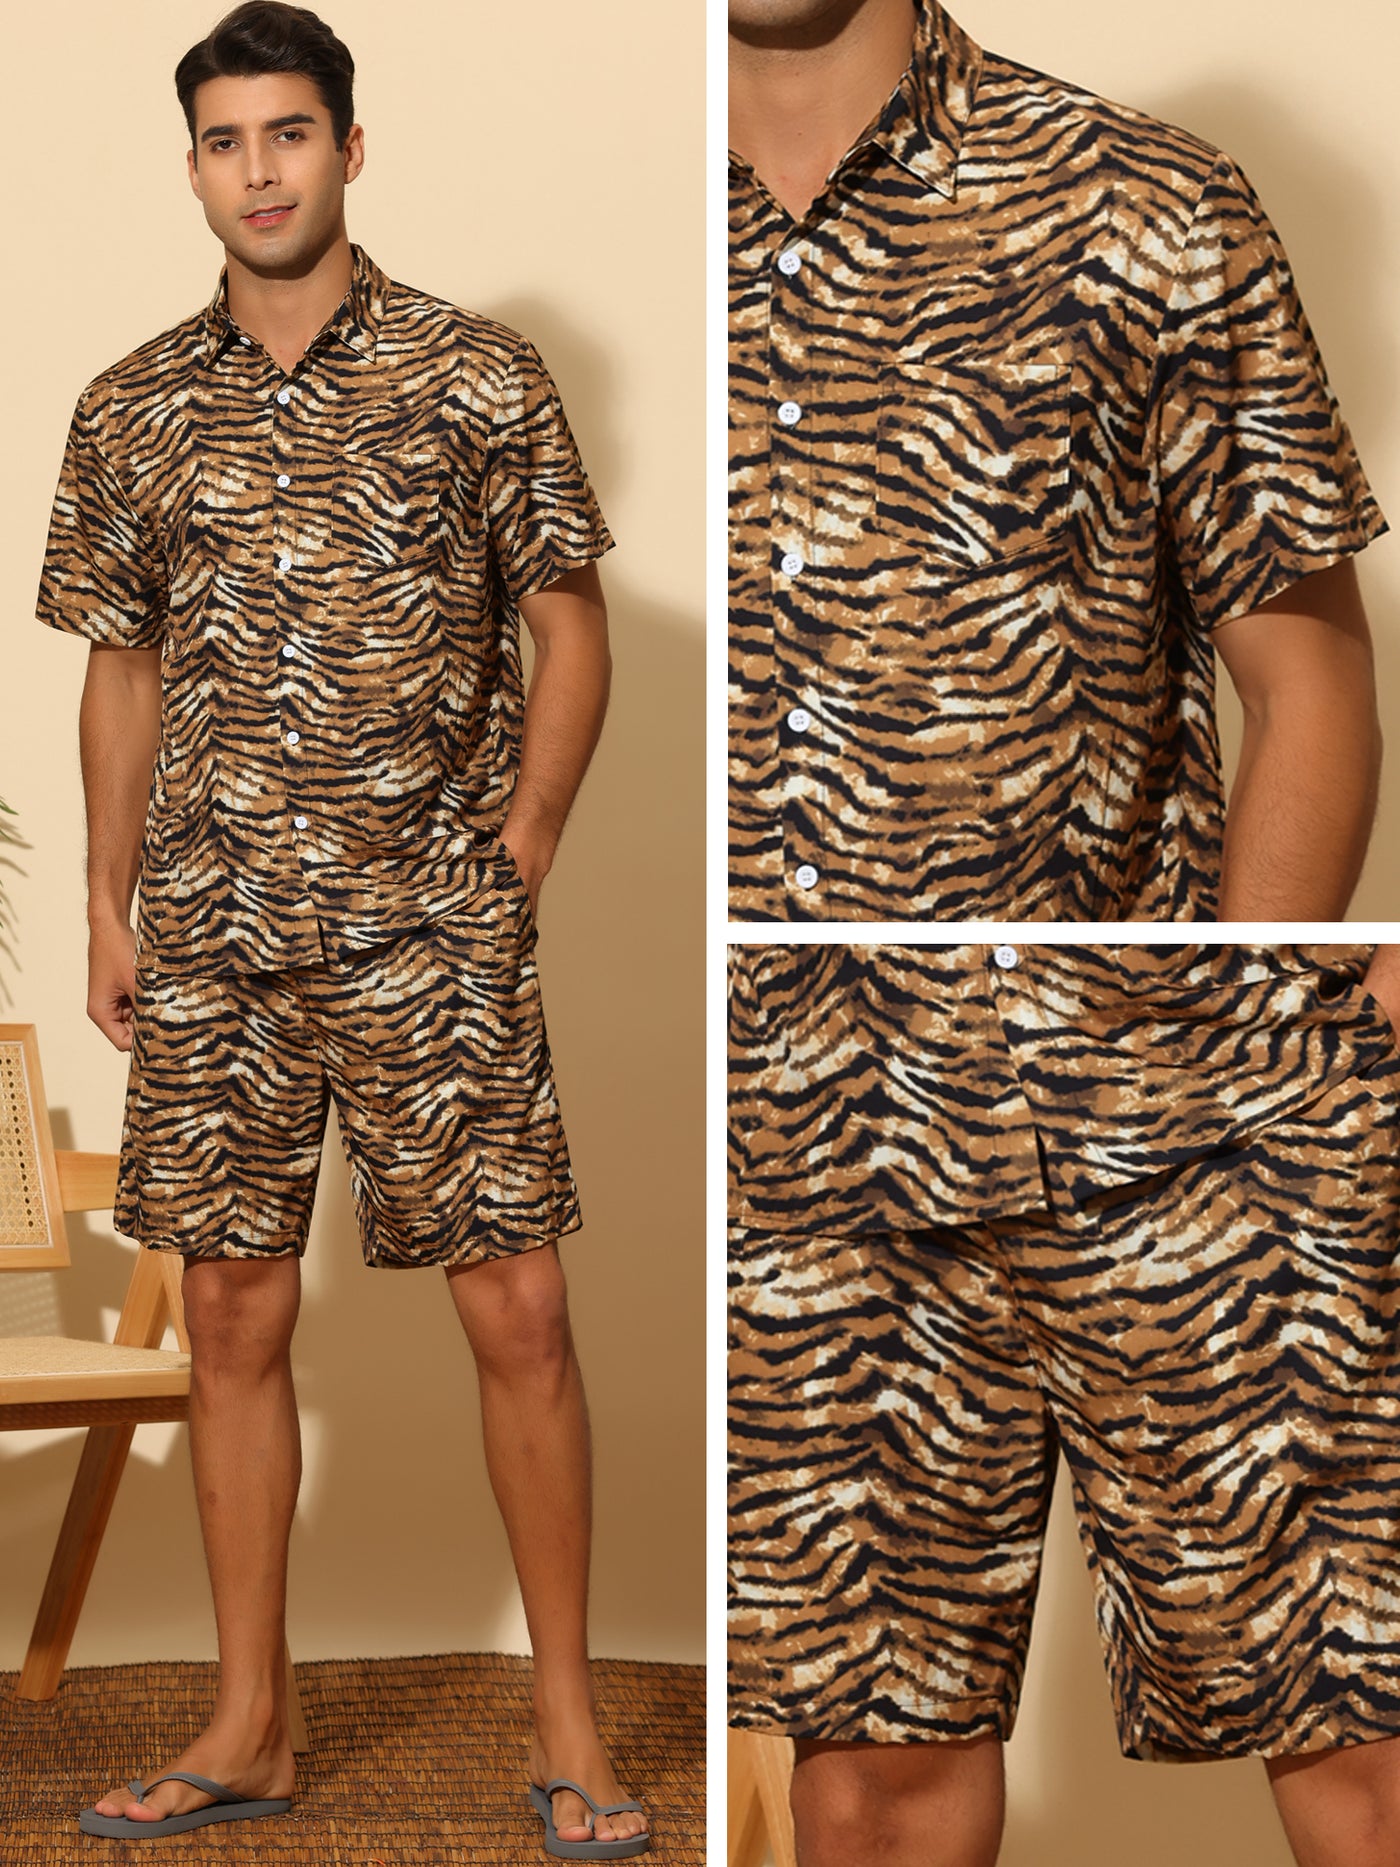 Bublédon Animal Printed Shirts for Men's Short Sleeves Hawaiian Set 2 Pieces Summer Outfit